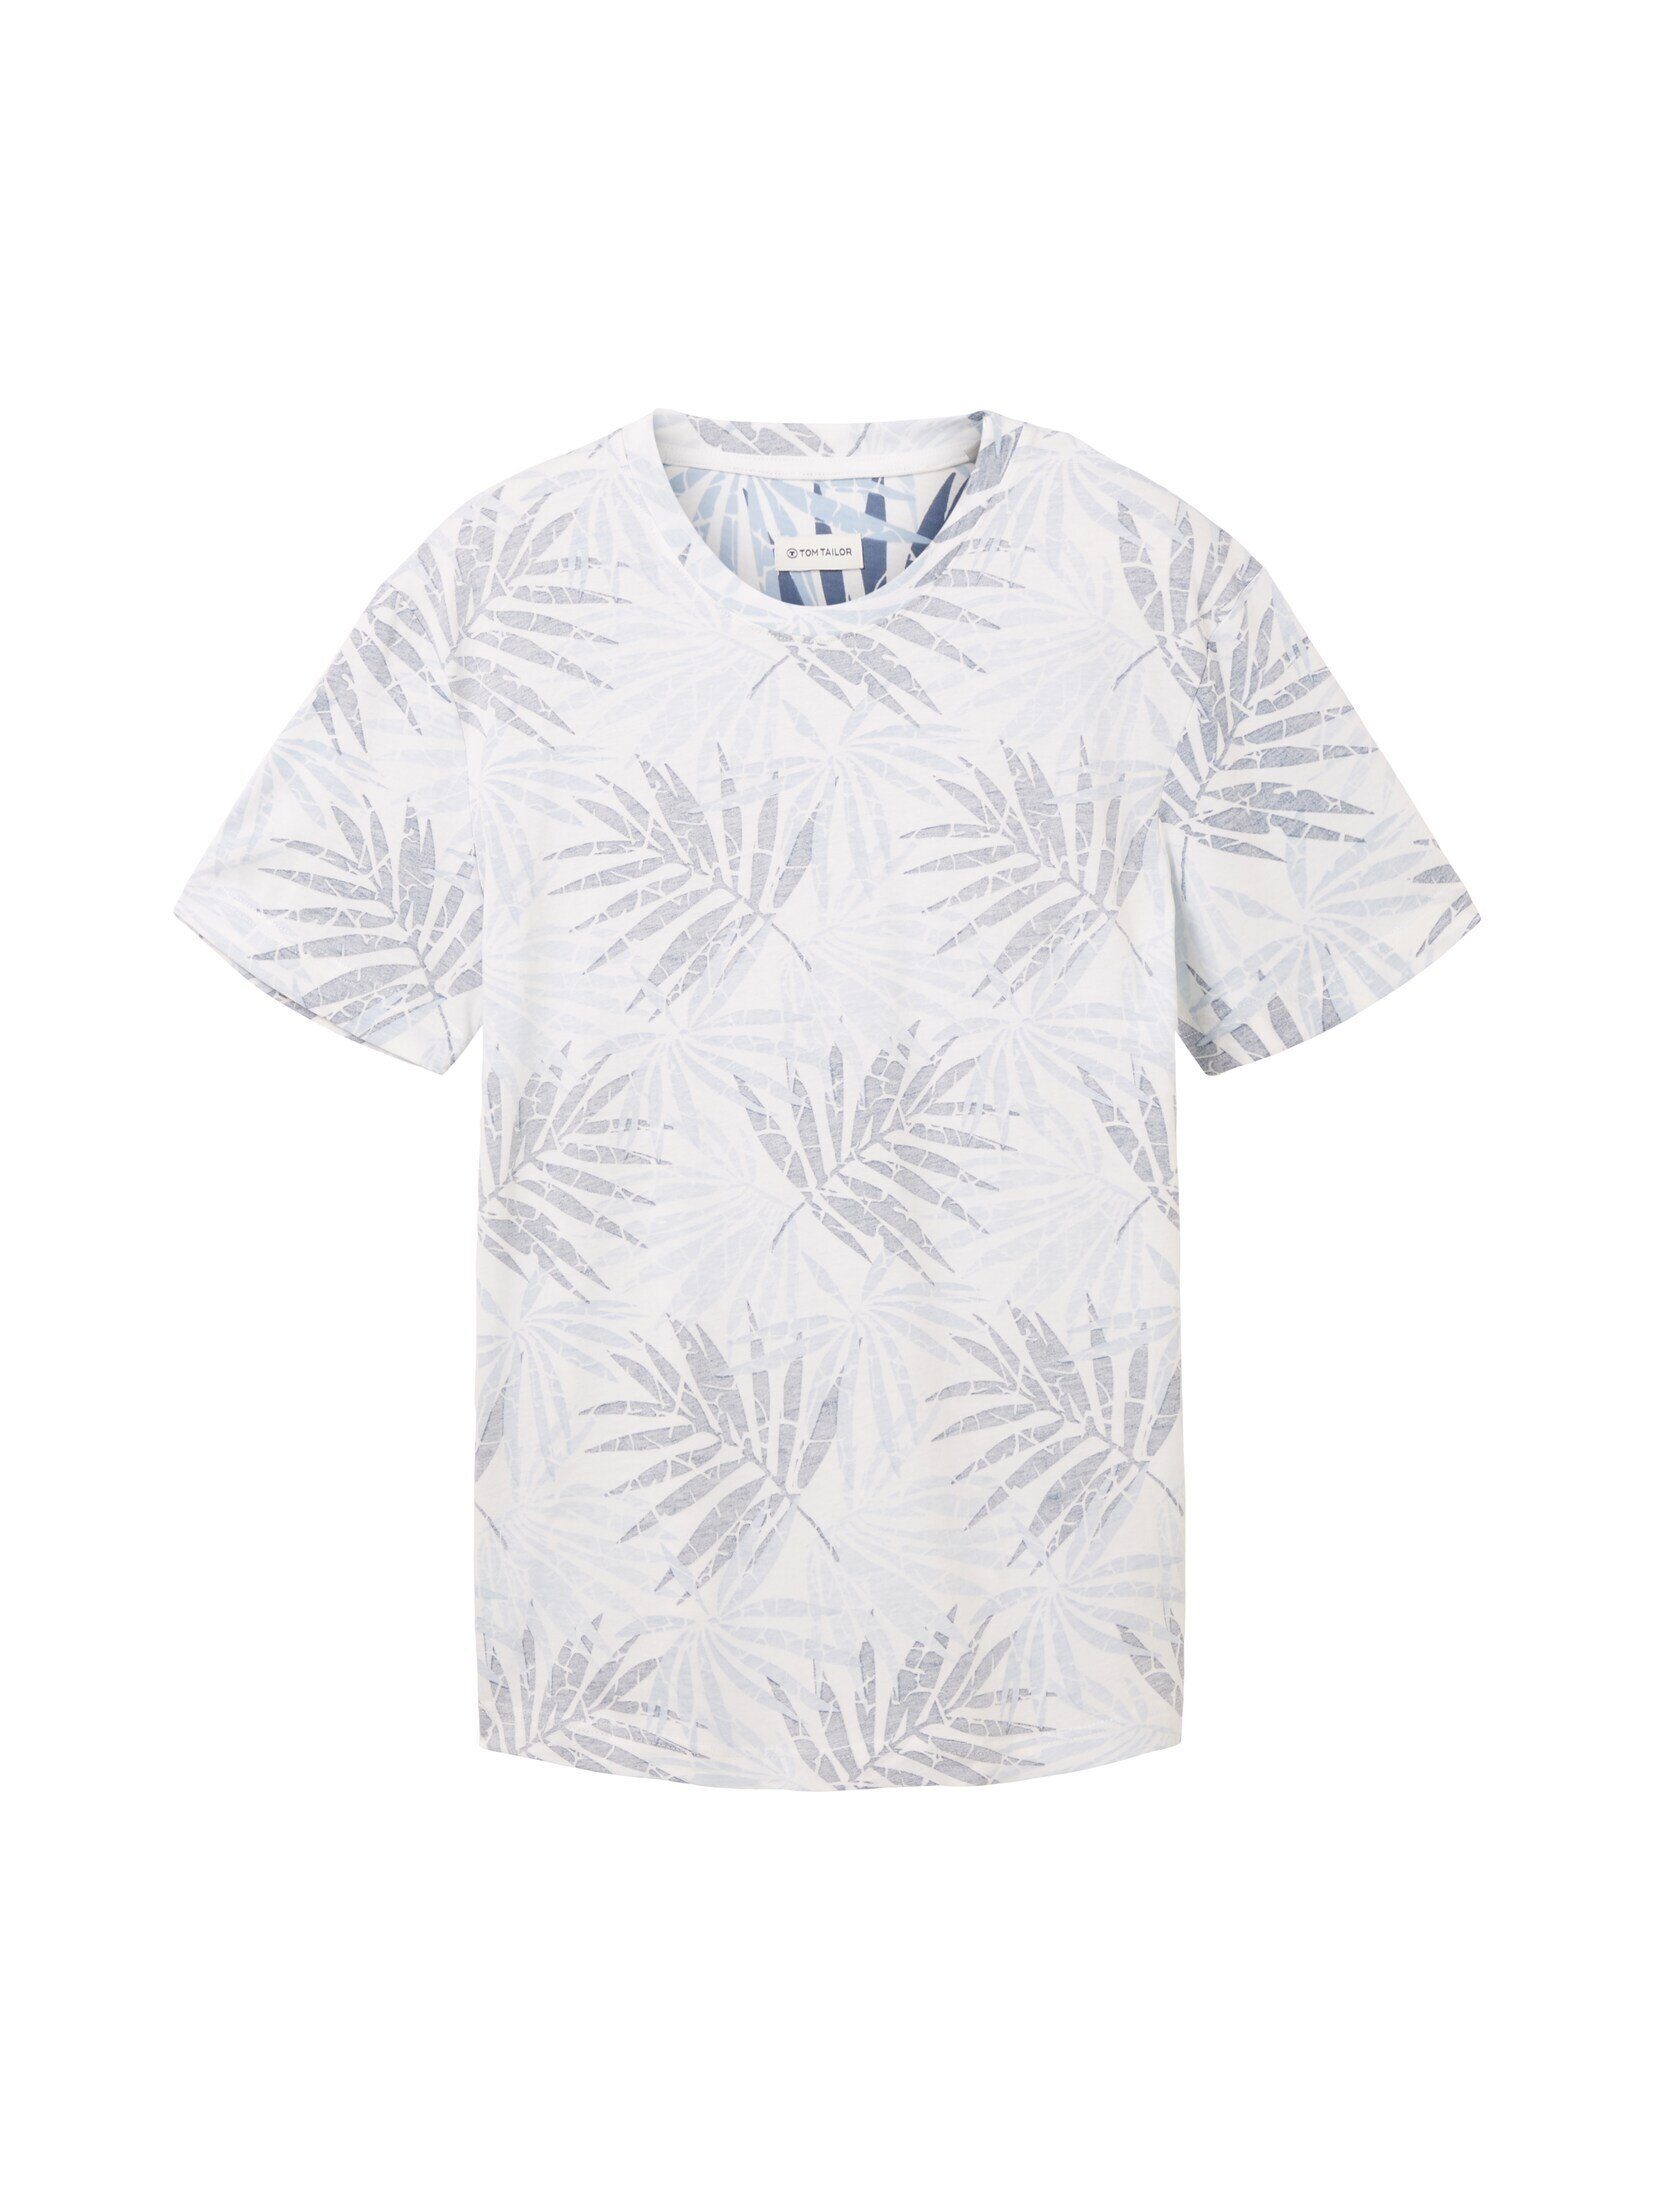 blue mit light T-Shirt leaf T-Shirt TAILOR design tonal Allover-Print TOM